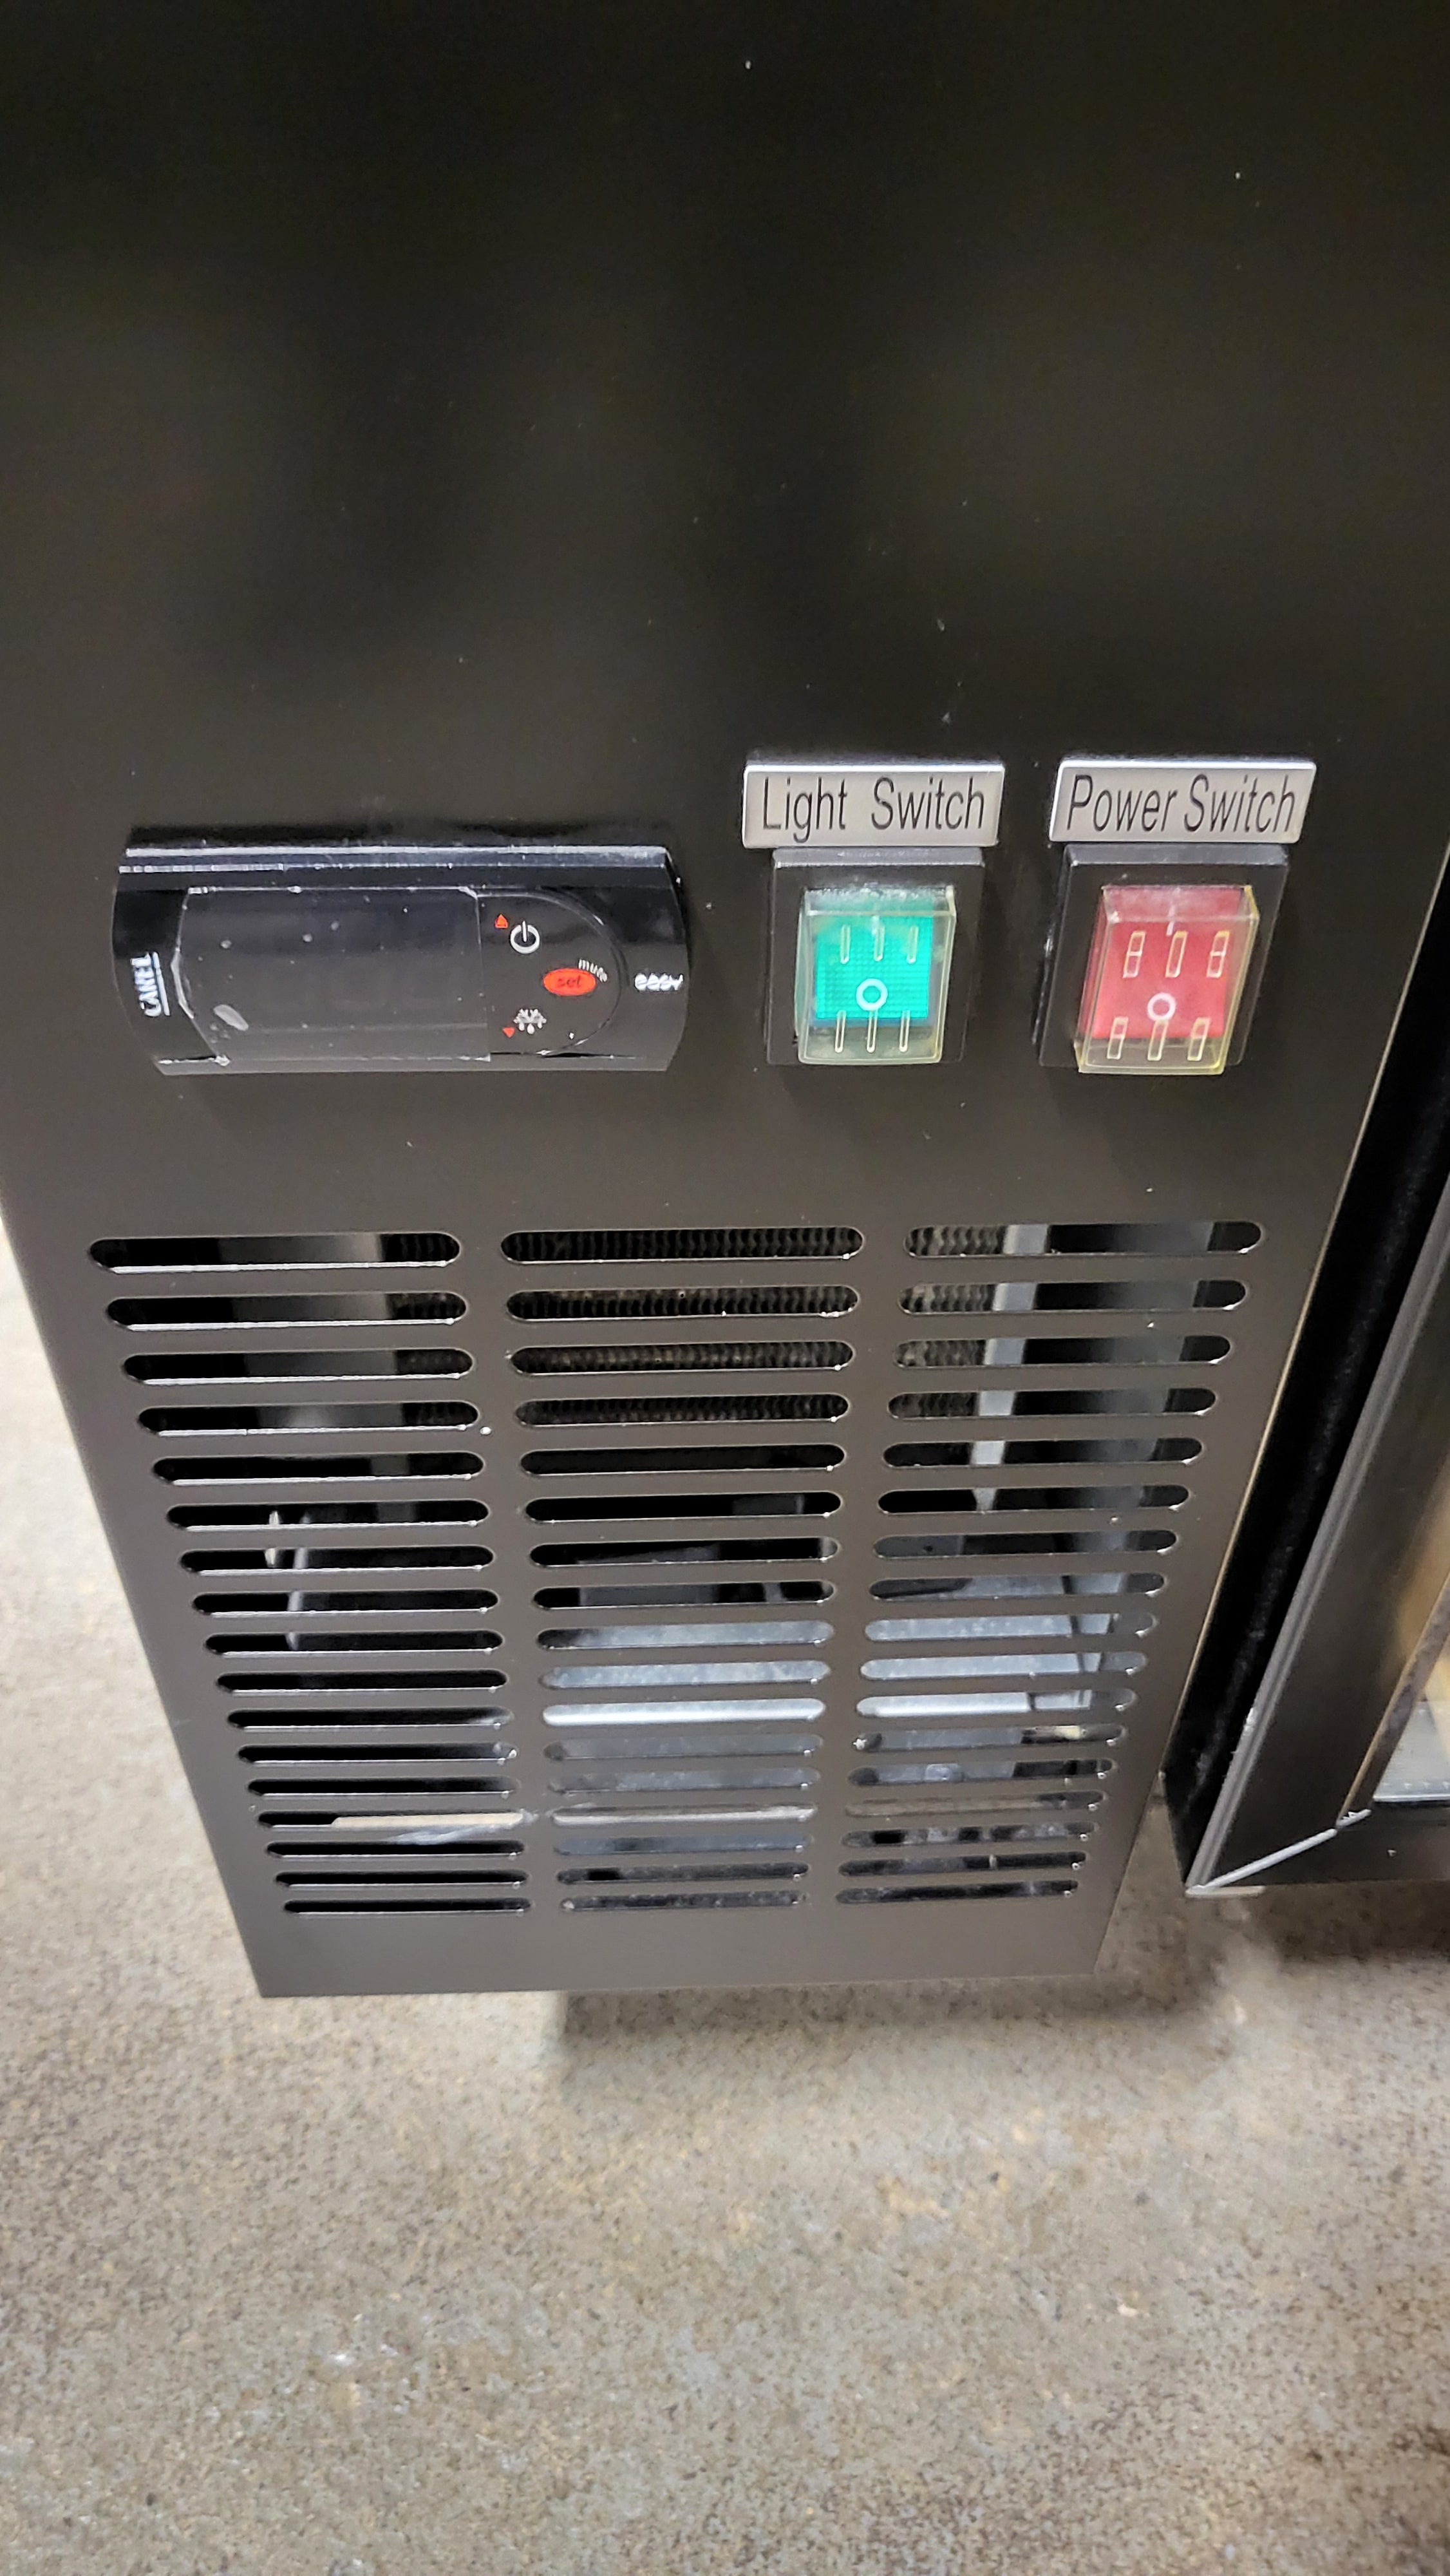 Thumbnail - NewAir NBB-90-SG Back Bar Refrigerator